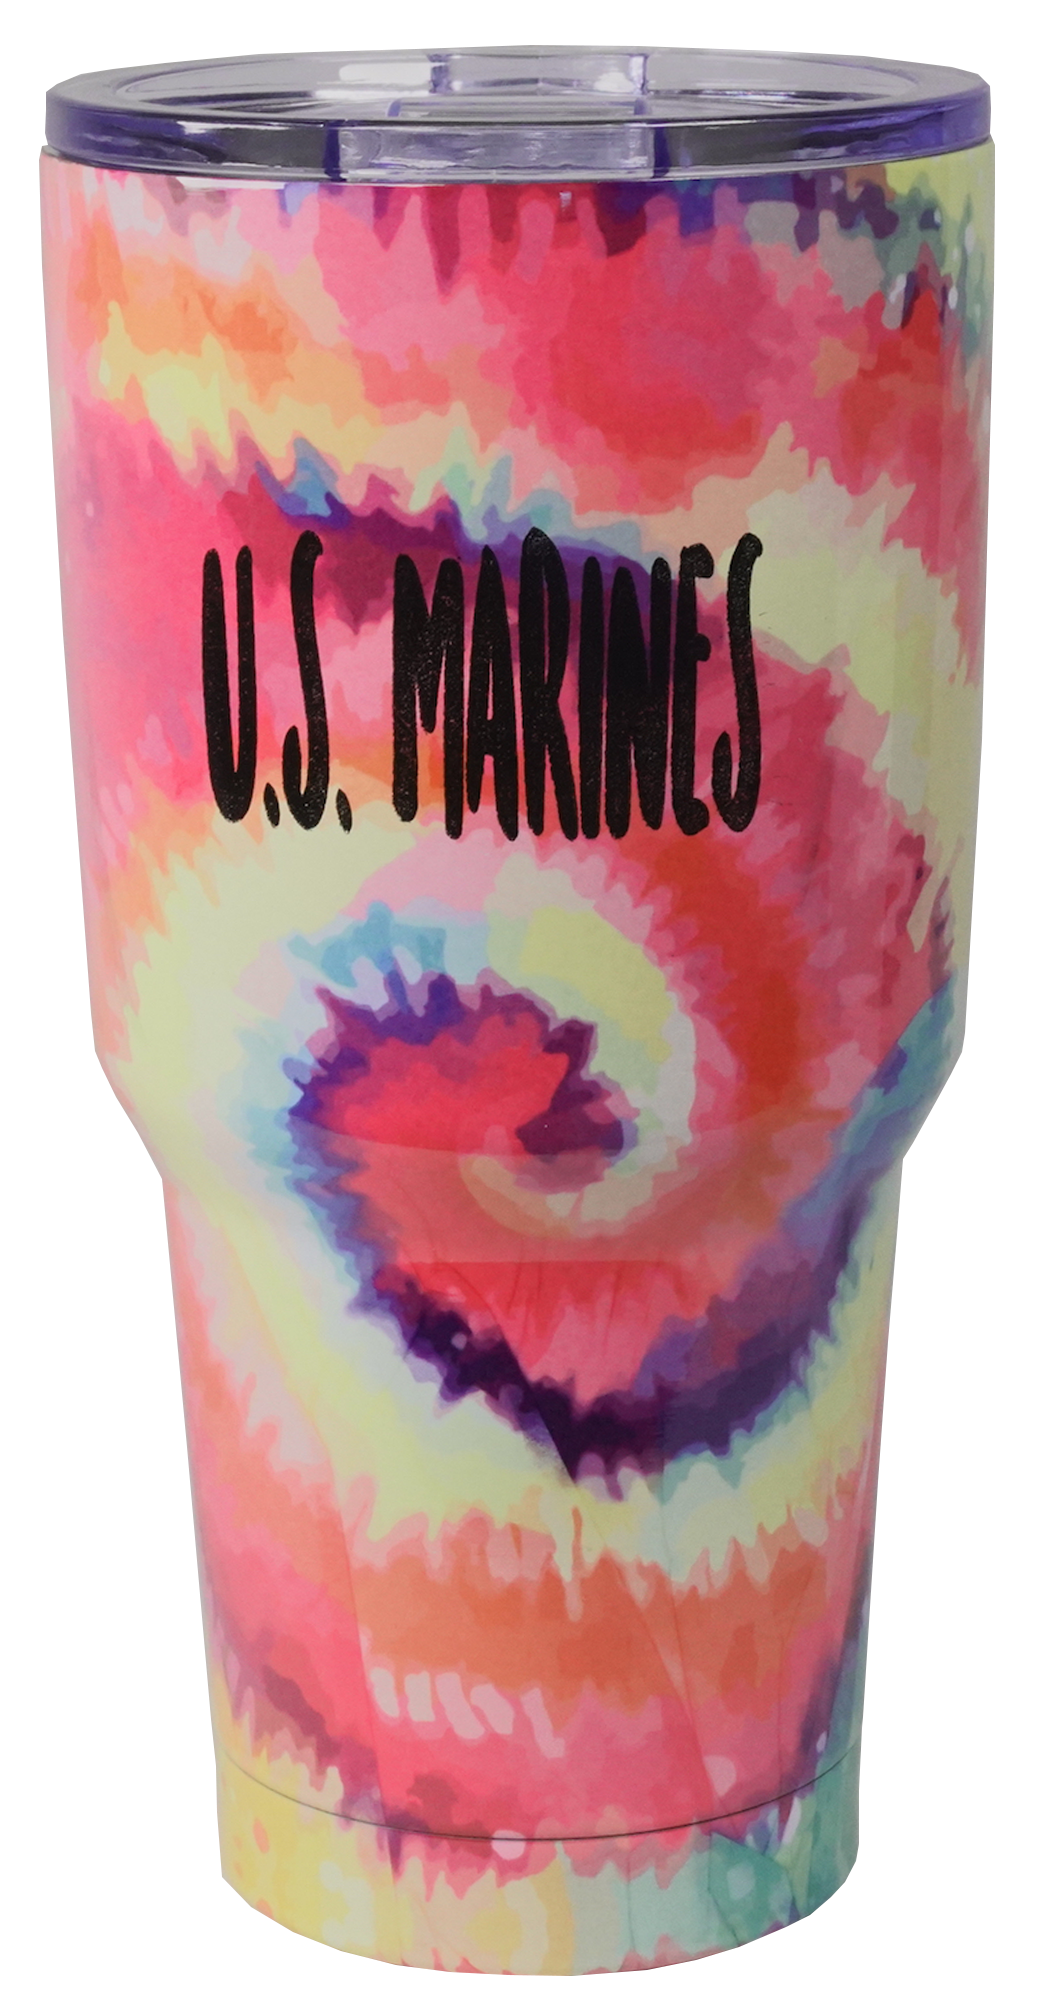 U.S. Marines Imprint on Tye Dye Stainless Tumbler - 28 oz.